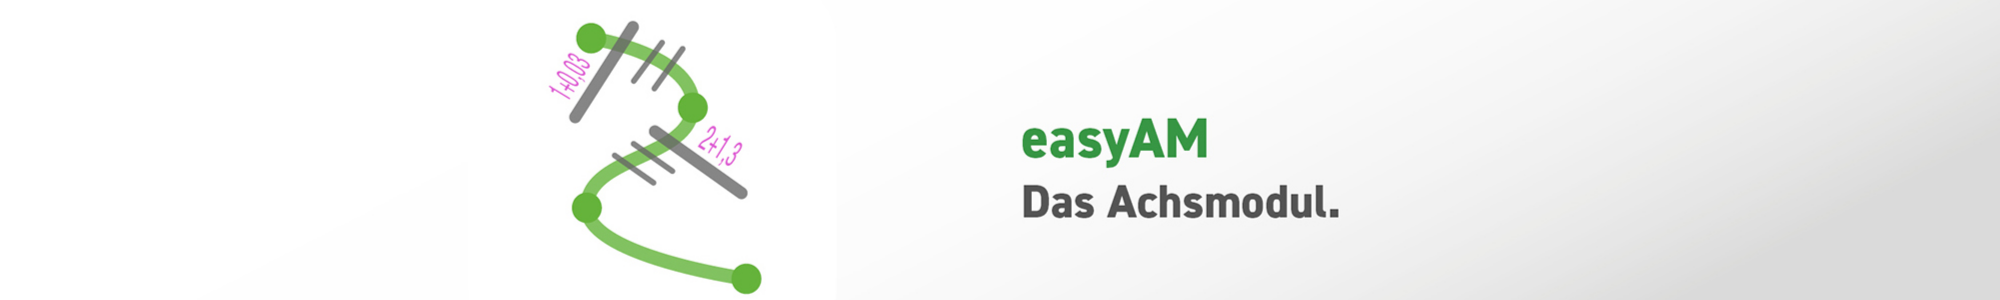 easyAM - isl-kocher GmbH